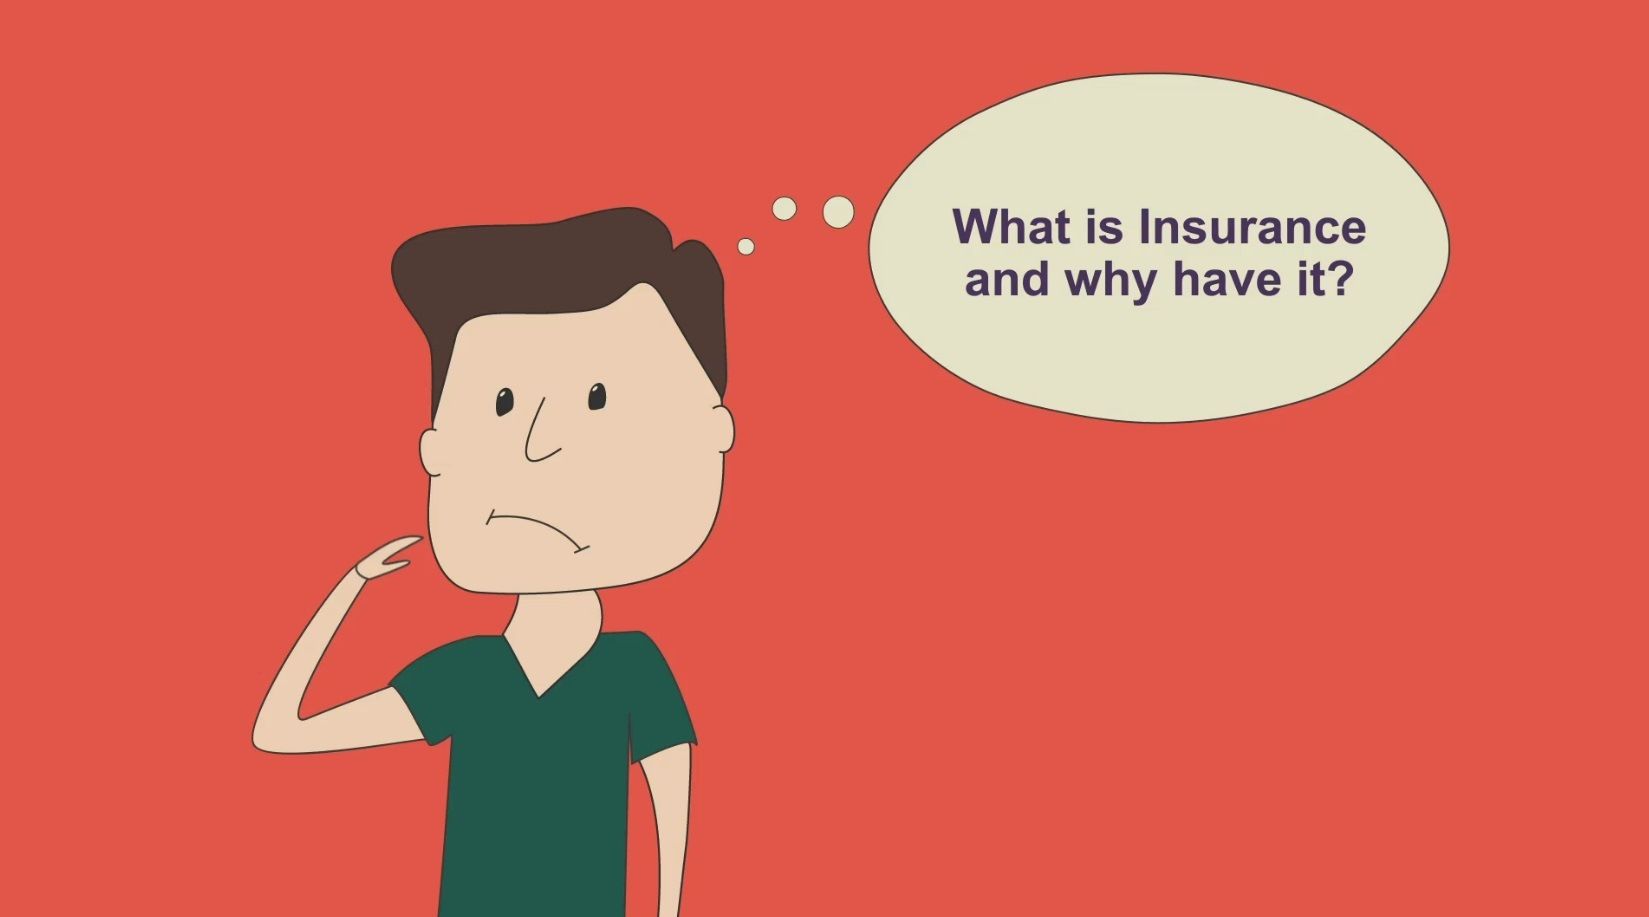 Video - Cartoon insurance